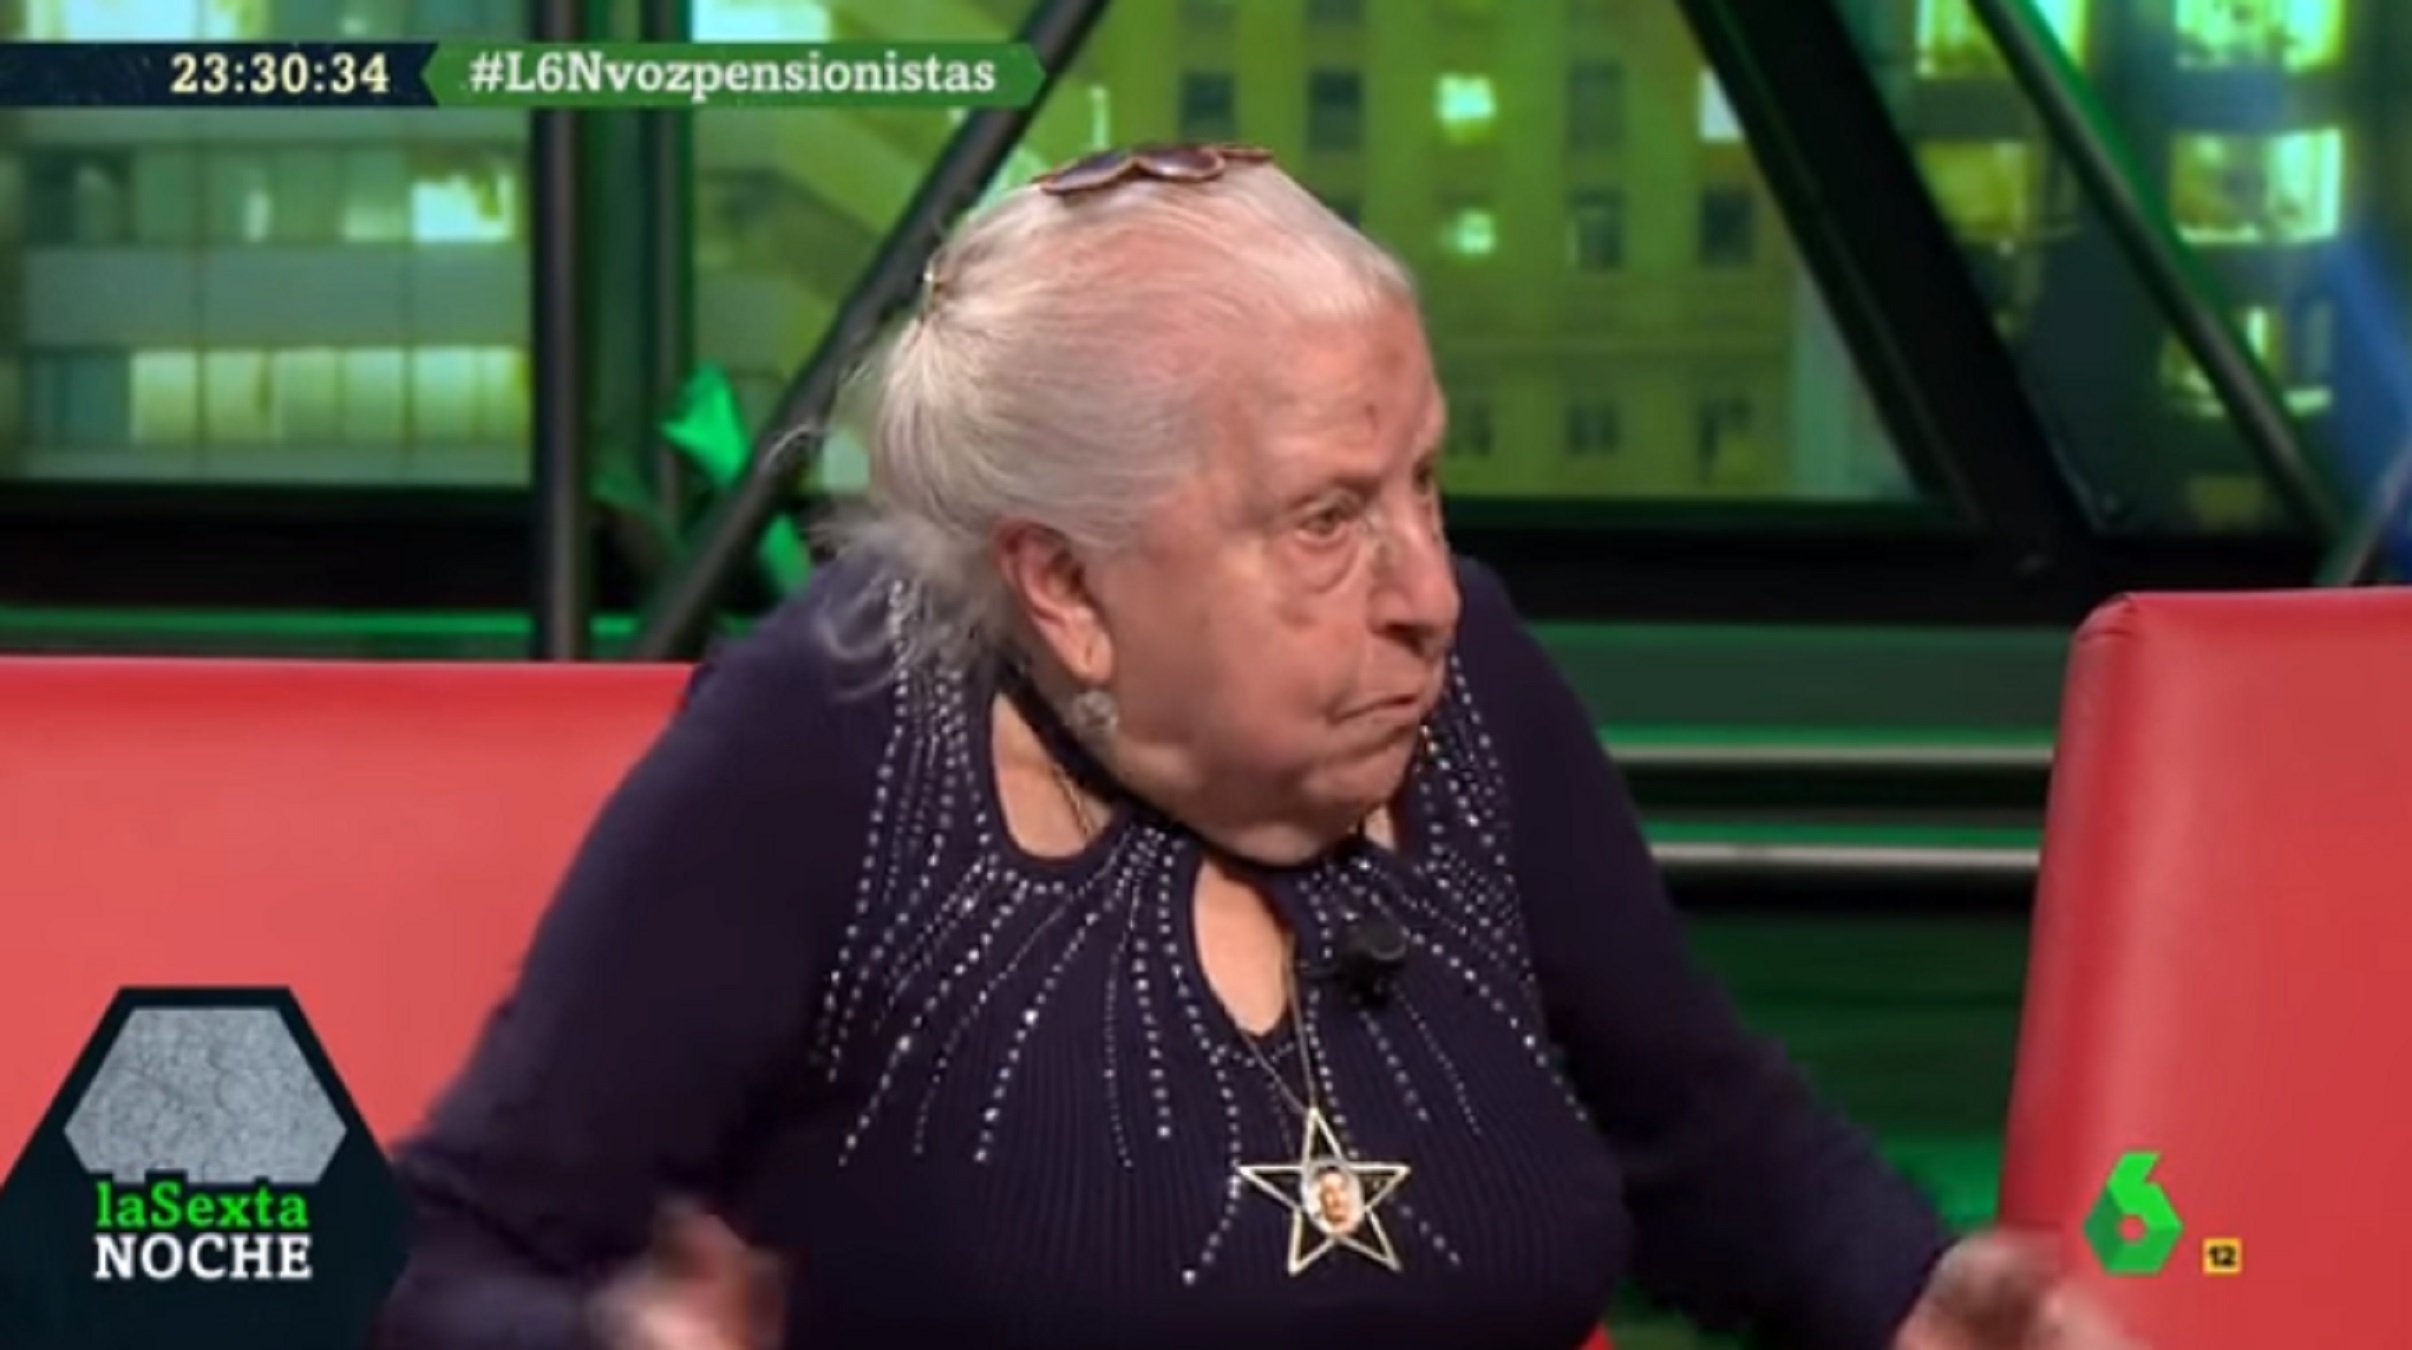 Muere Paquita, la entrañable pensionista que revolucionó 'La Sexta Noche'